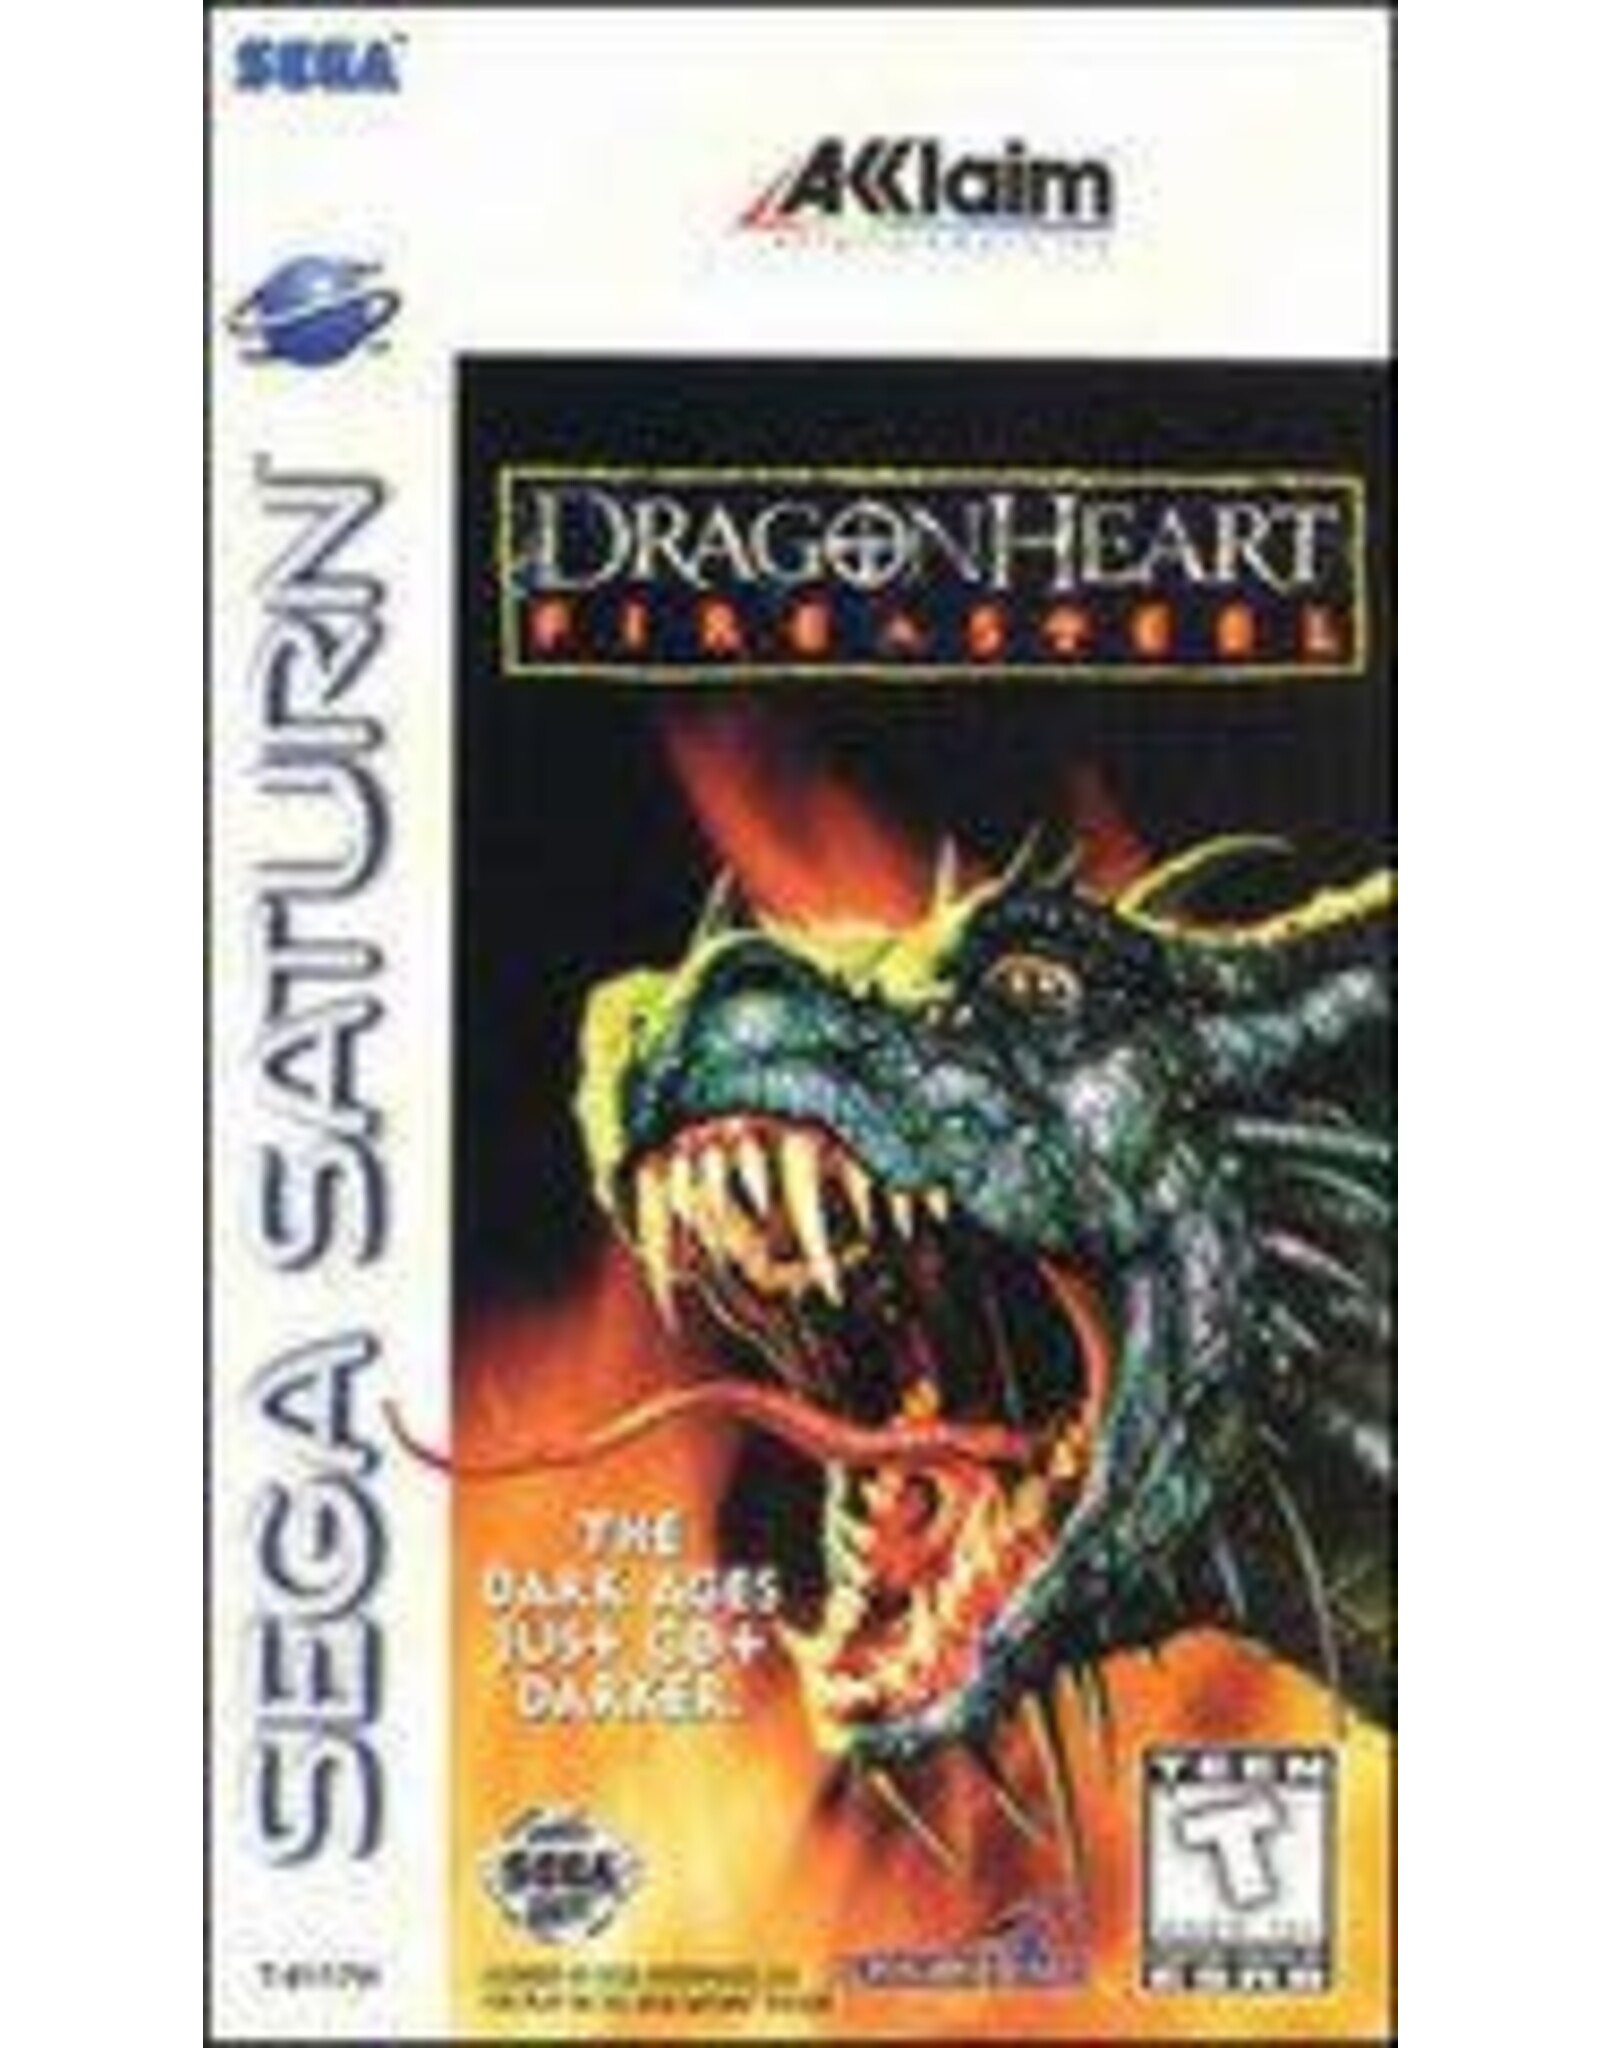 Sega Saturn Dragonheart Fire & Steel (No Manual, Damaged Case)